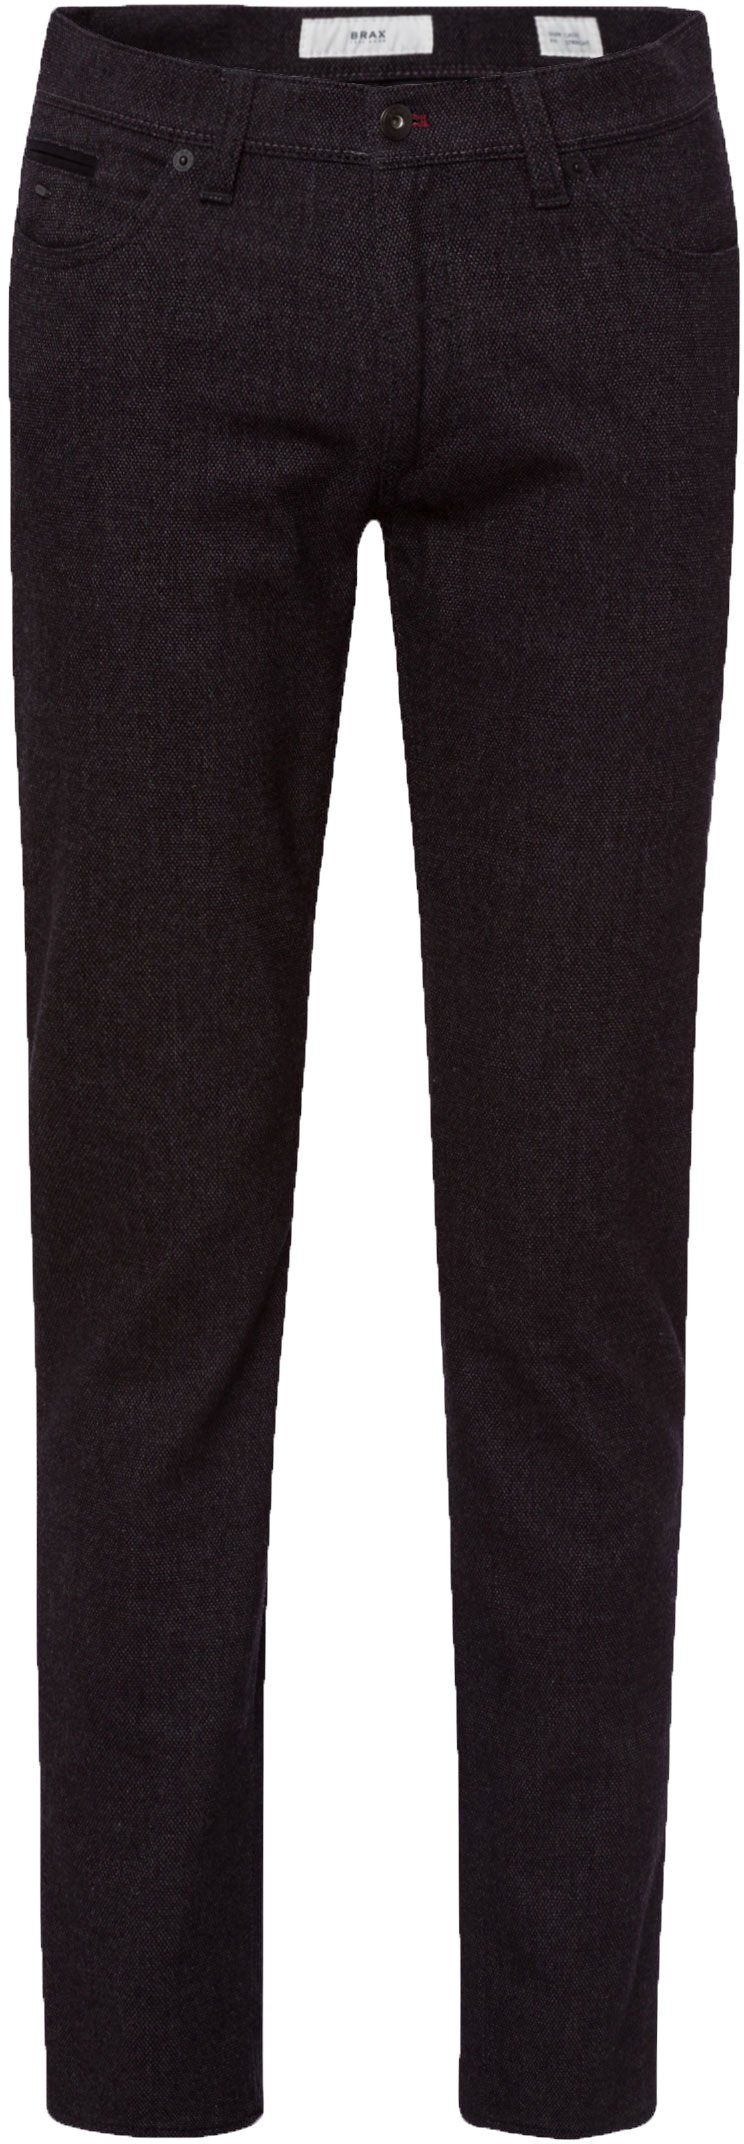 Brax Cadiz Pants Five Pocket Woolook Anthracite Grey Dark Grey size W 34